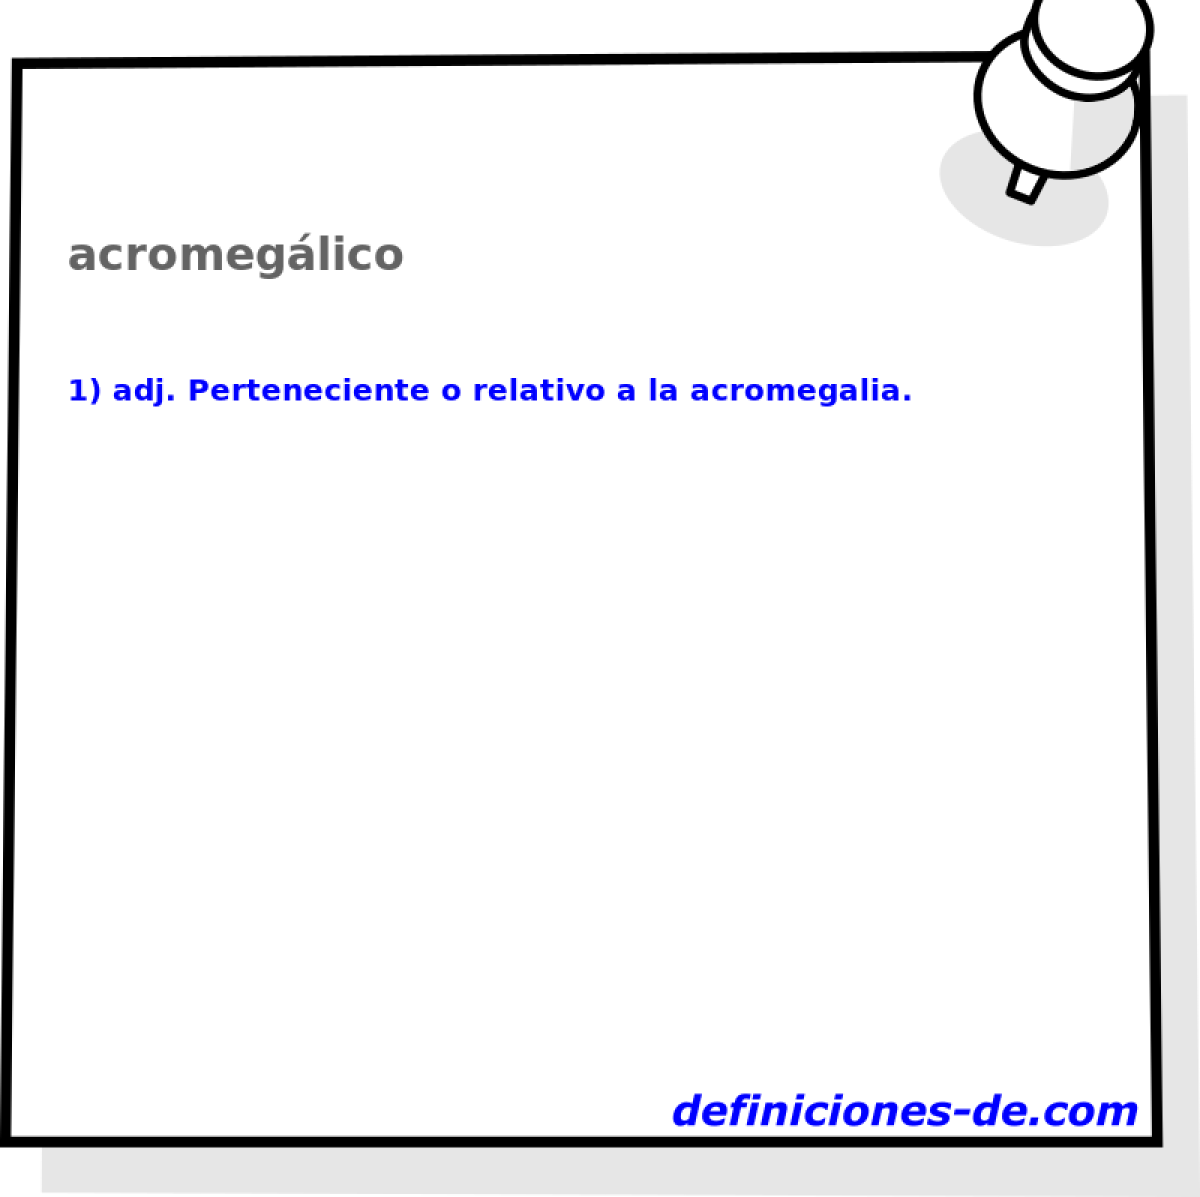 acromeglico 